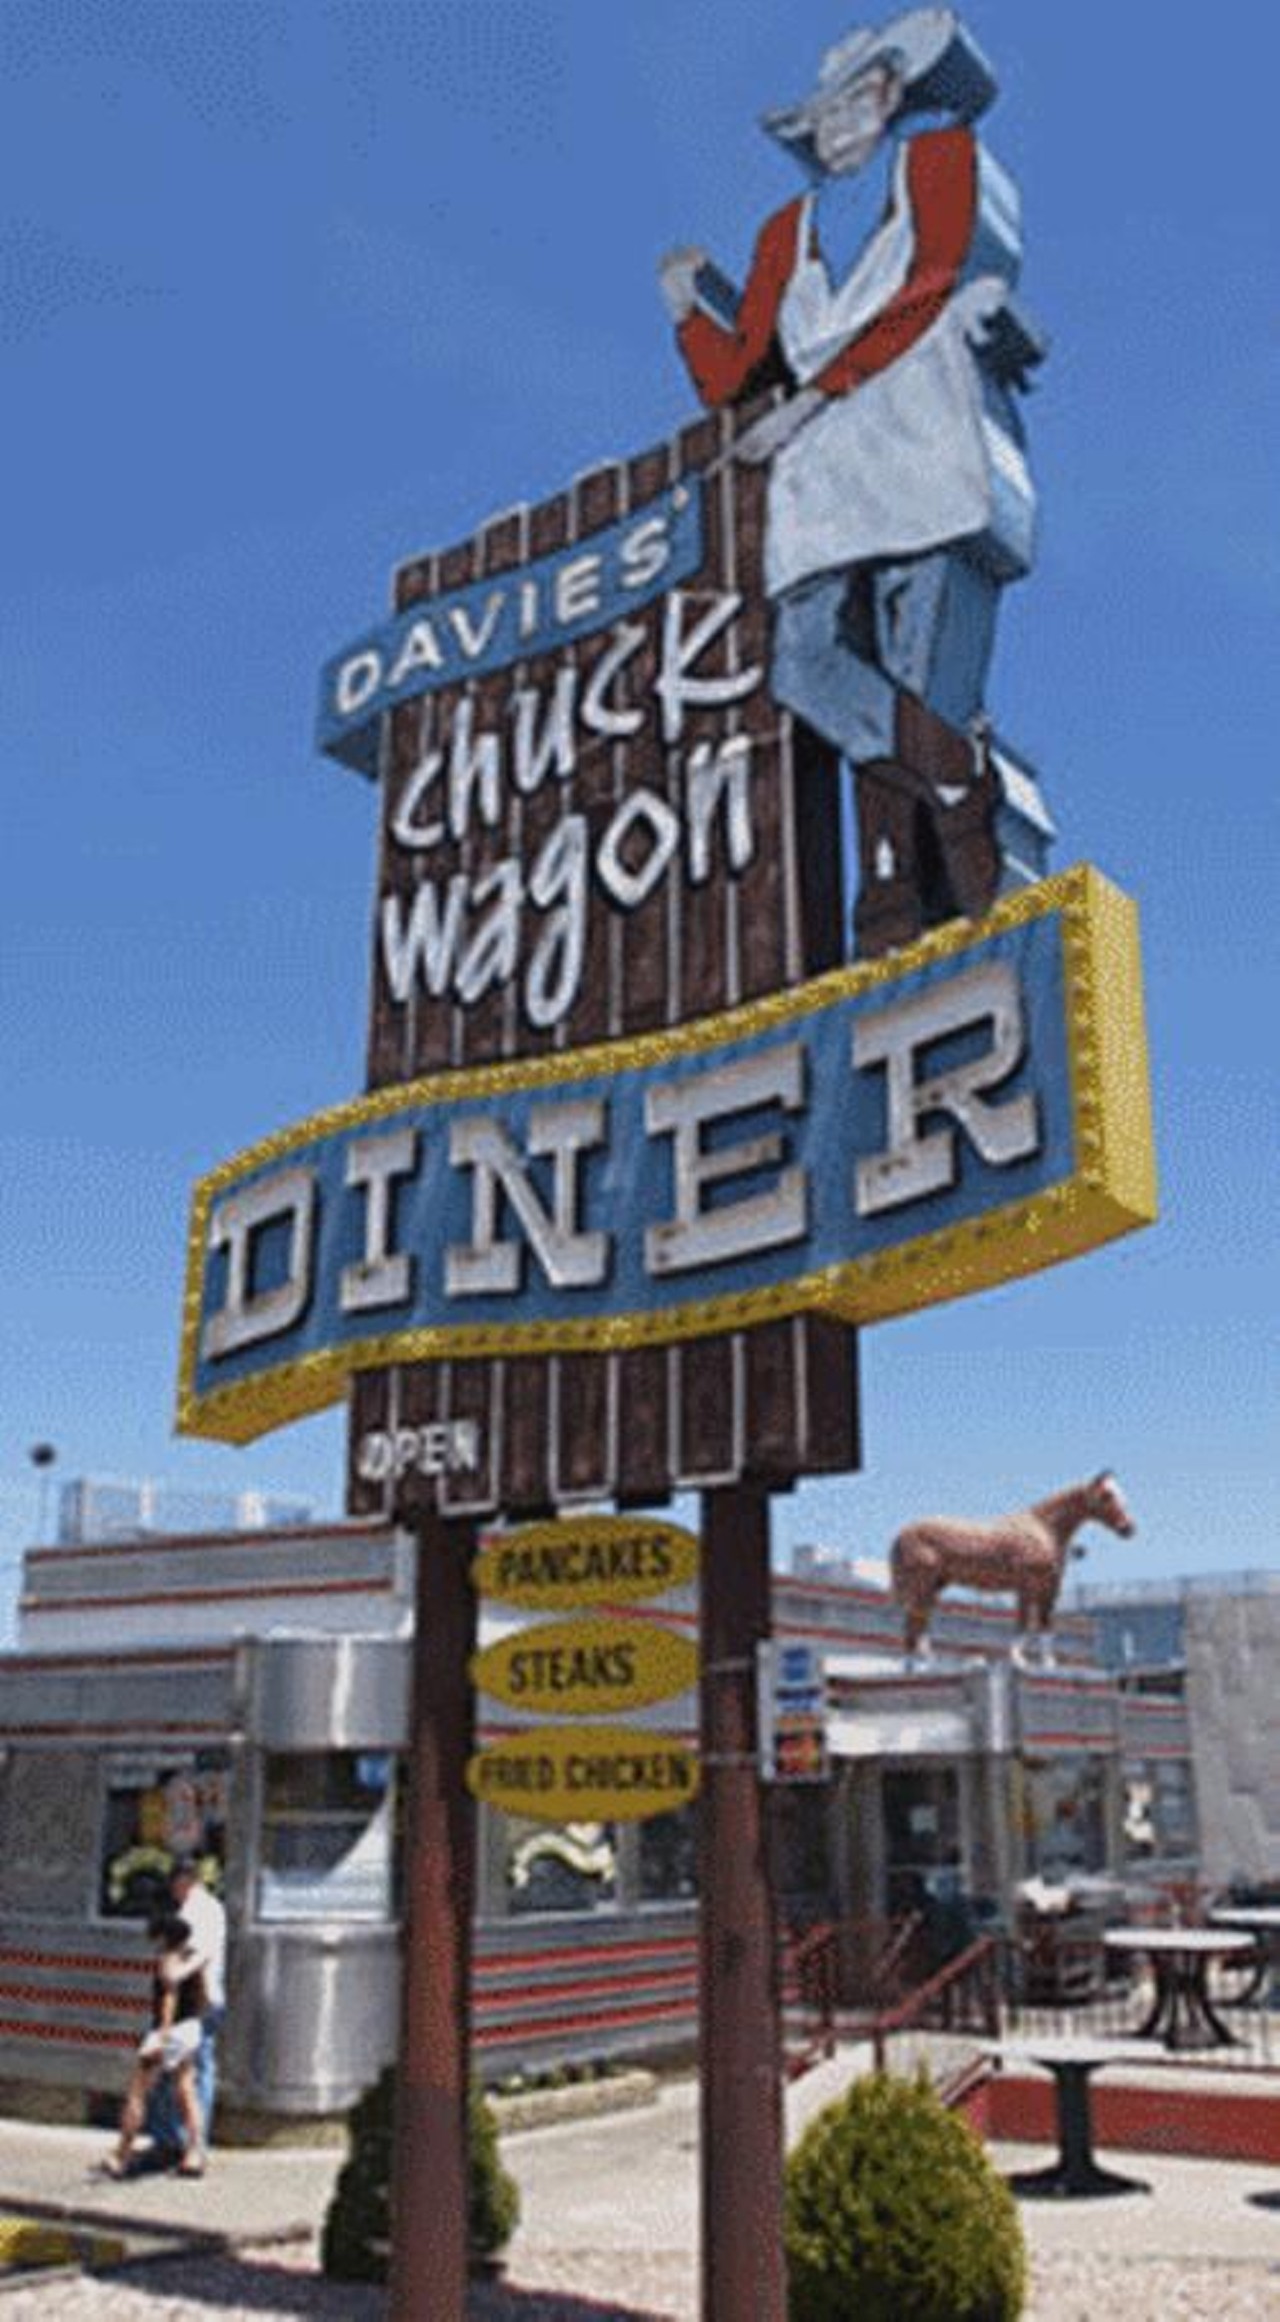 Davies Chuck Wagon Diner Lakewood Diner Restaurant